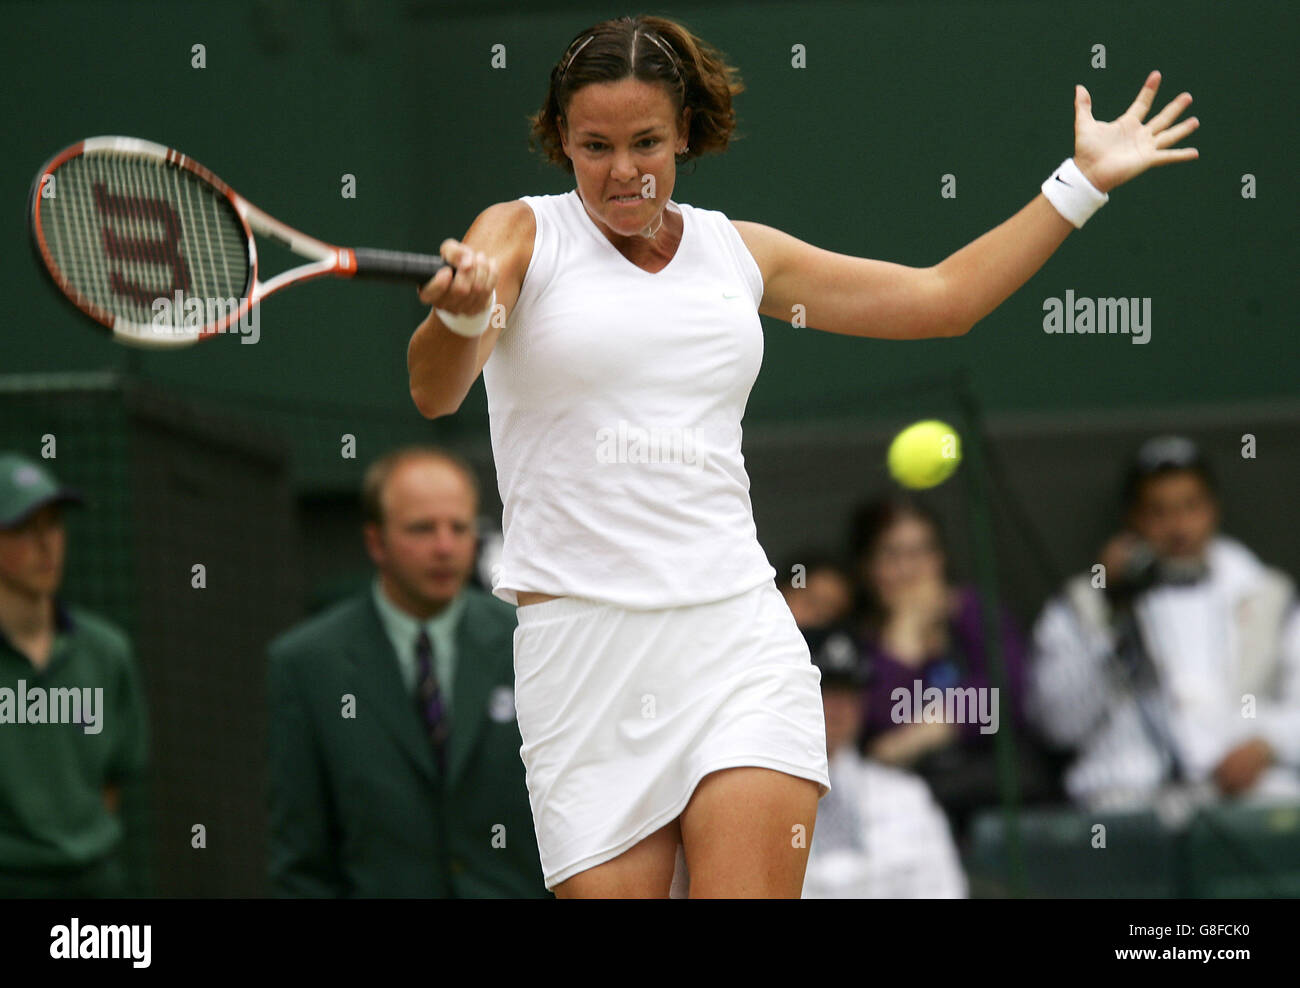 Tennis - Wimbledon Championships 2005 - Women's Final - Venus Williams v Lindsay Davenport - All England Club Stock Photo